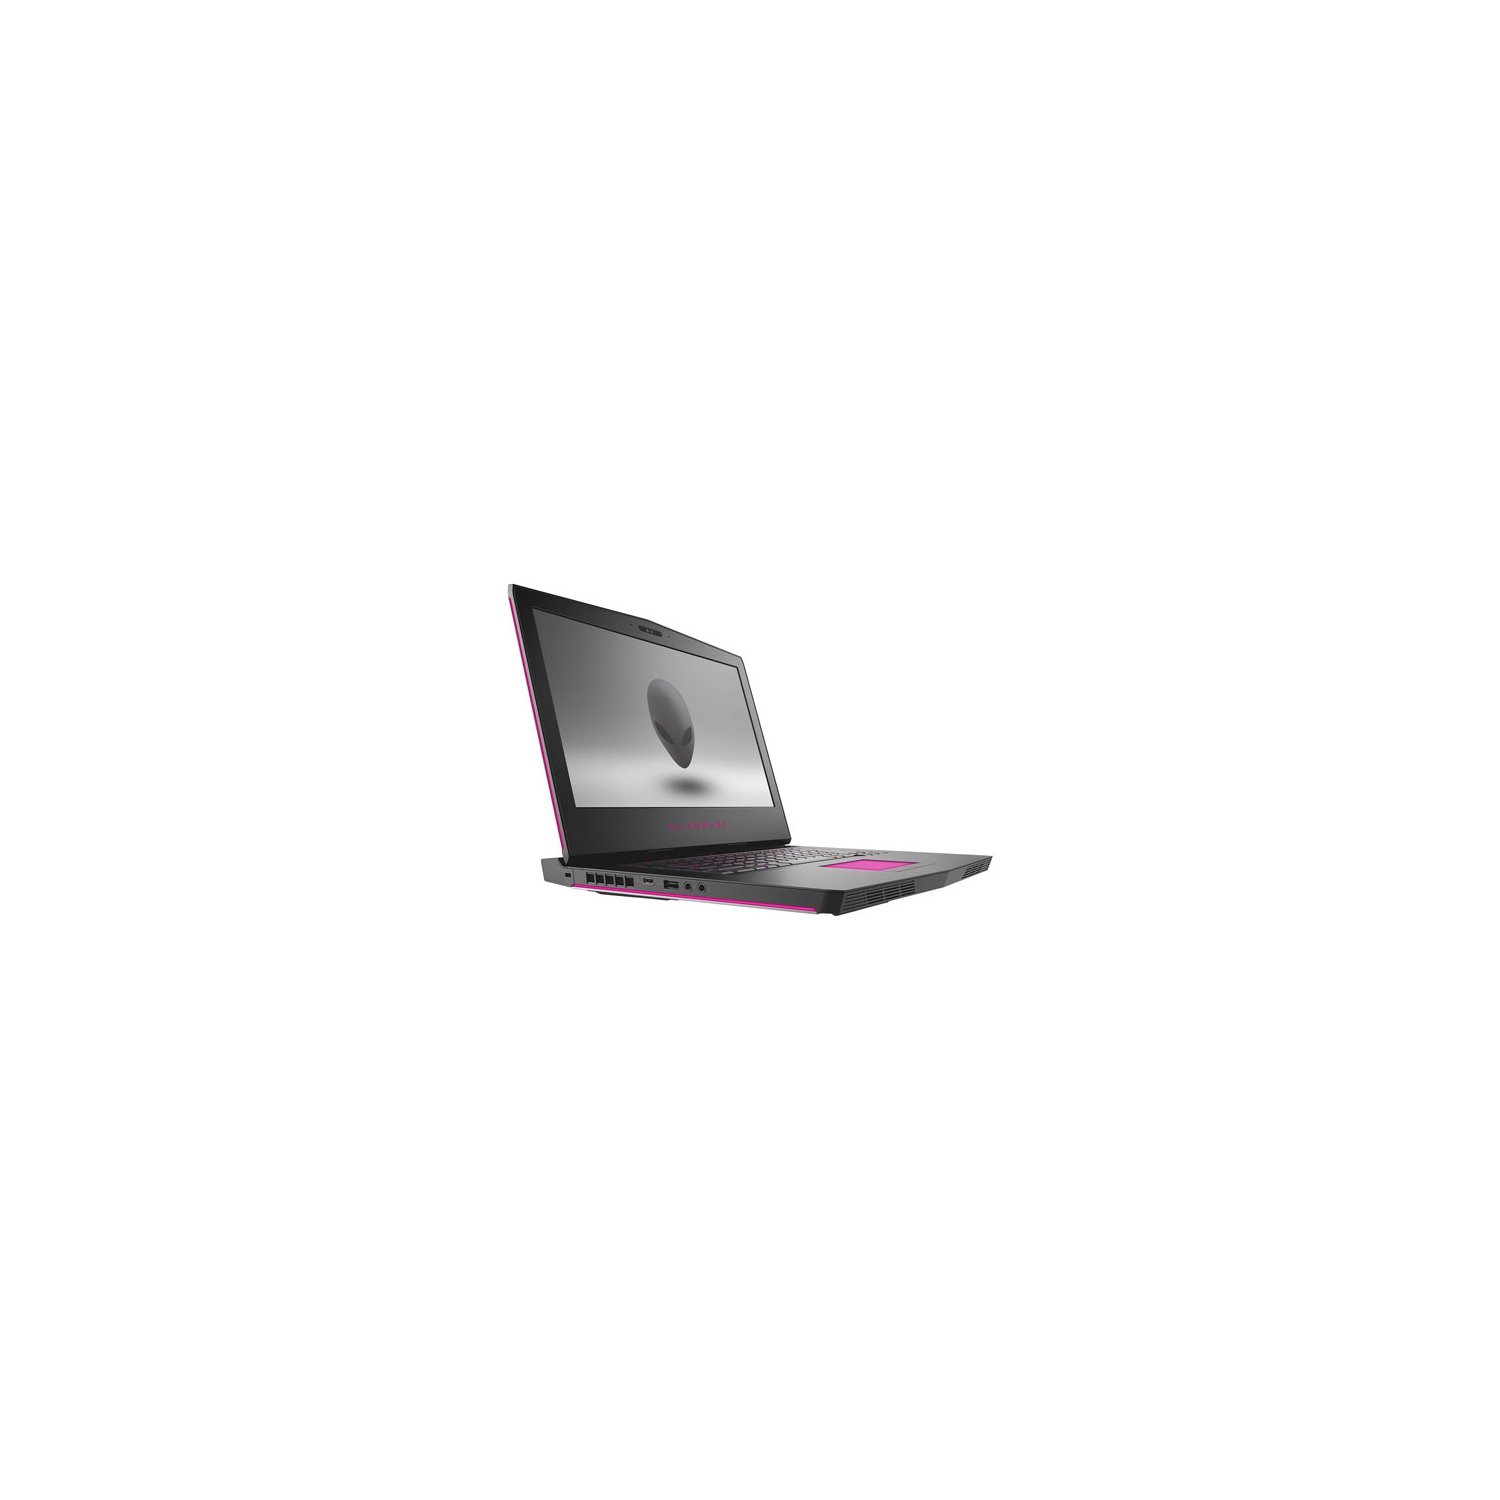 Alienware 15.6" Gaming Laptop (Intel Core i7-8750H/1TB HDD/256GB SSD/16GB RAM/NVIDIA GTX 1060) - En - Open Box